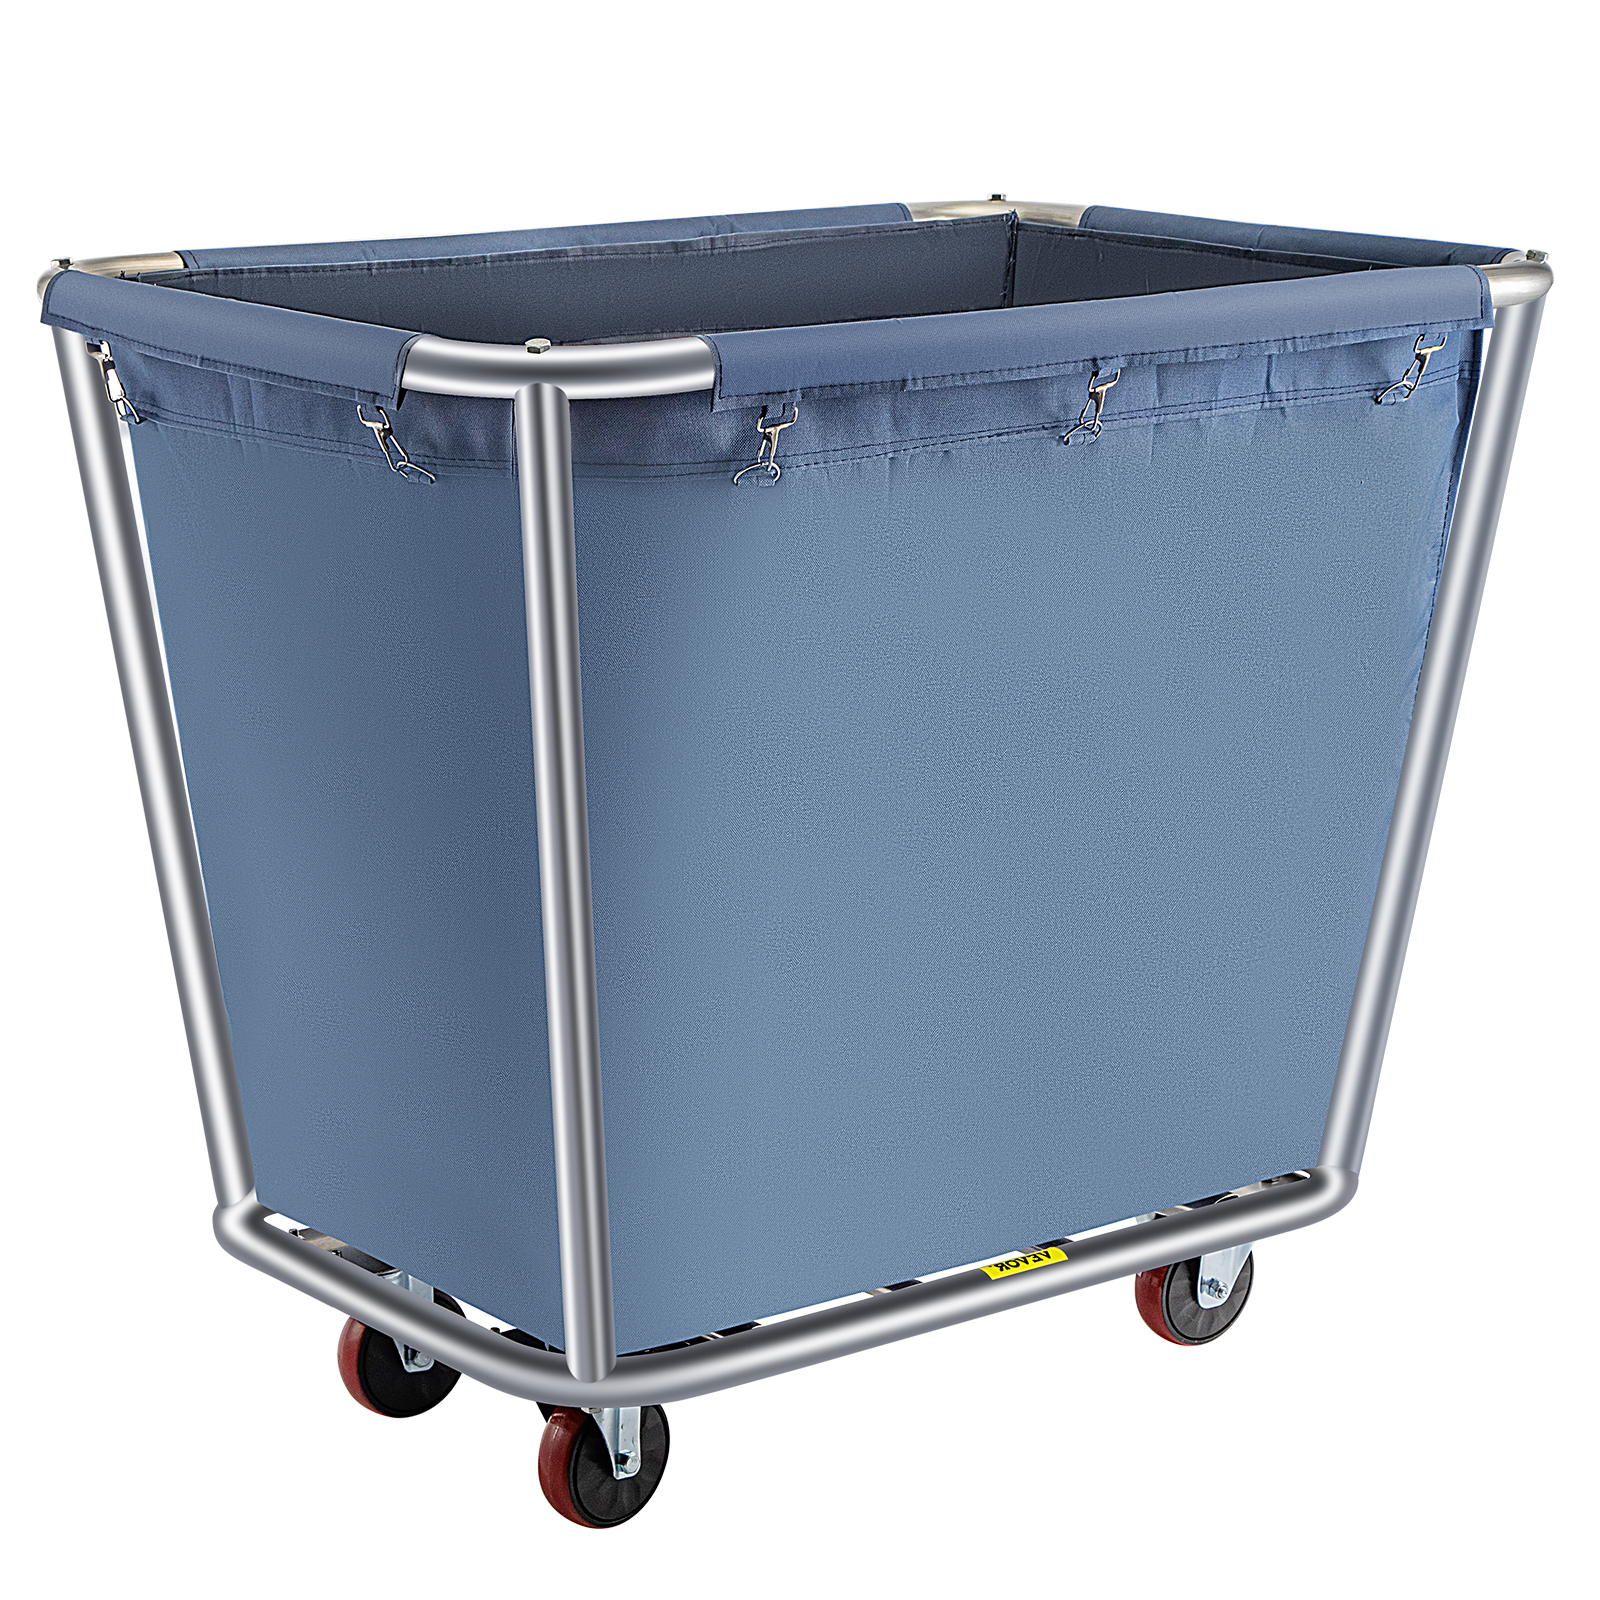 Vevor Laundry Cart 12 Bushel Steel Canvas Laundry Basket Truck Cap Basket Cart от Vevor Many GEOs